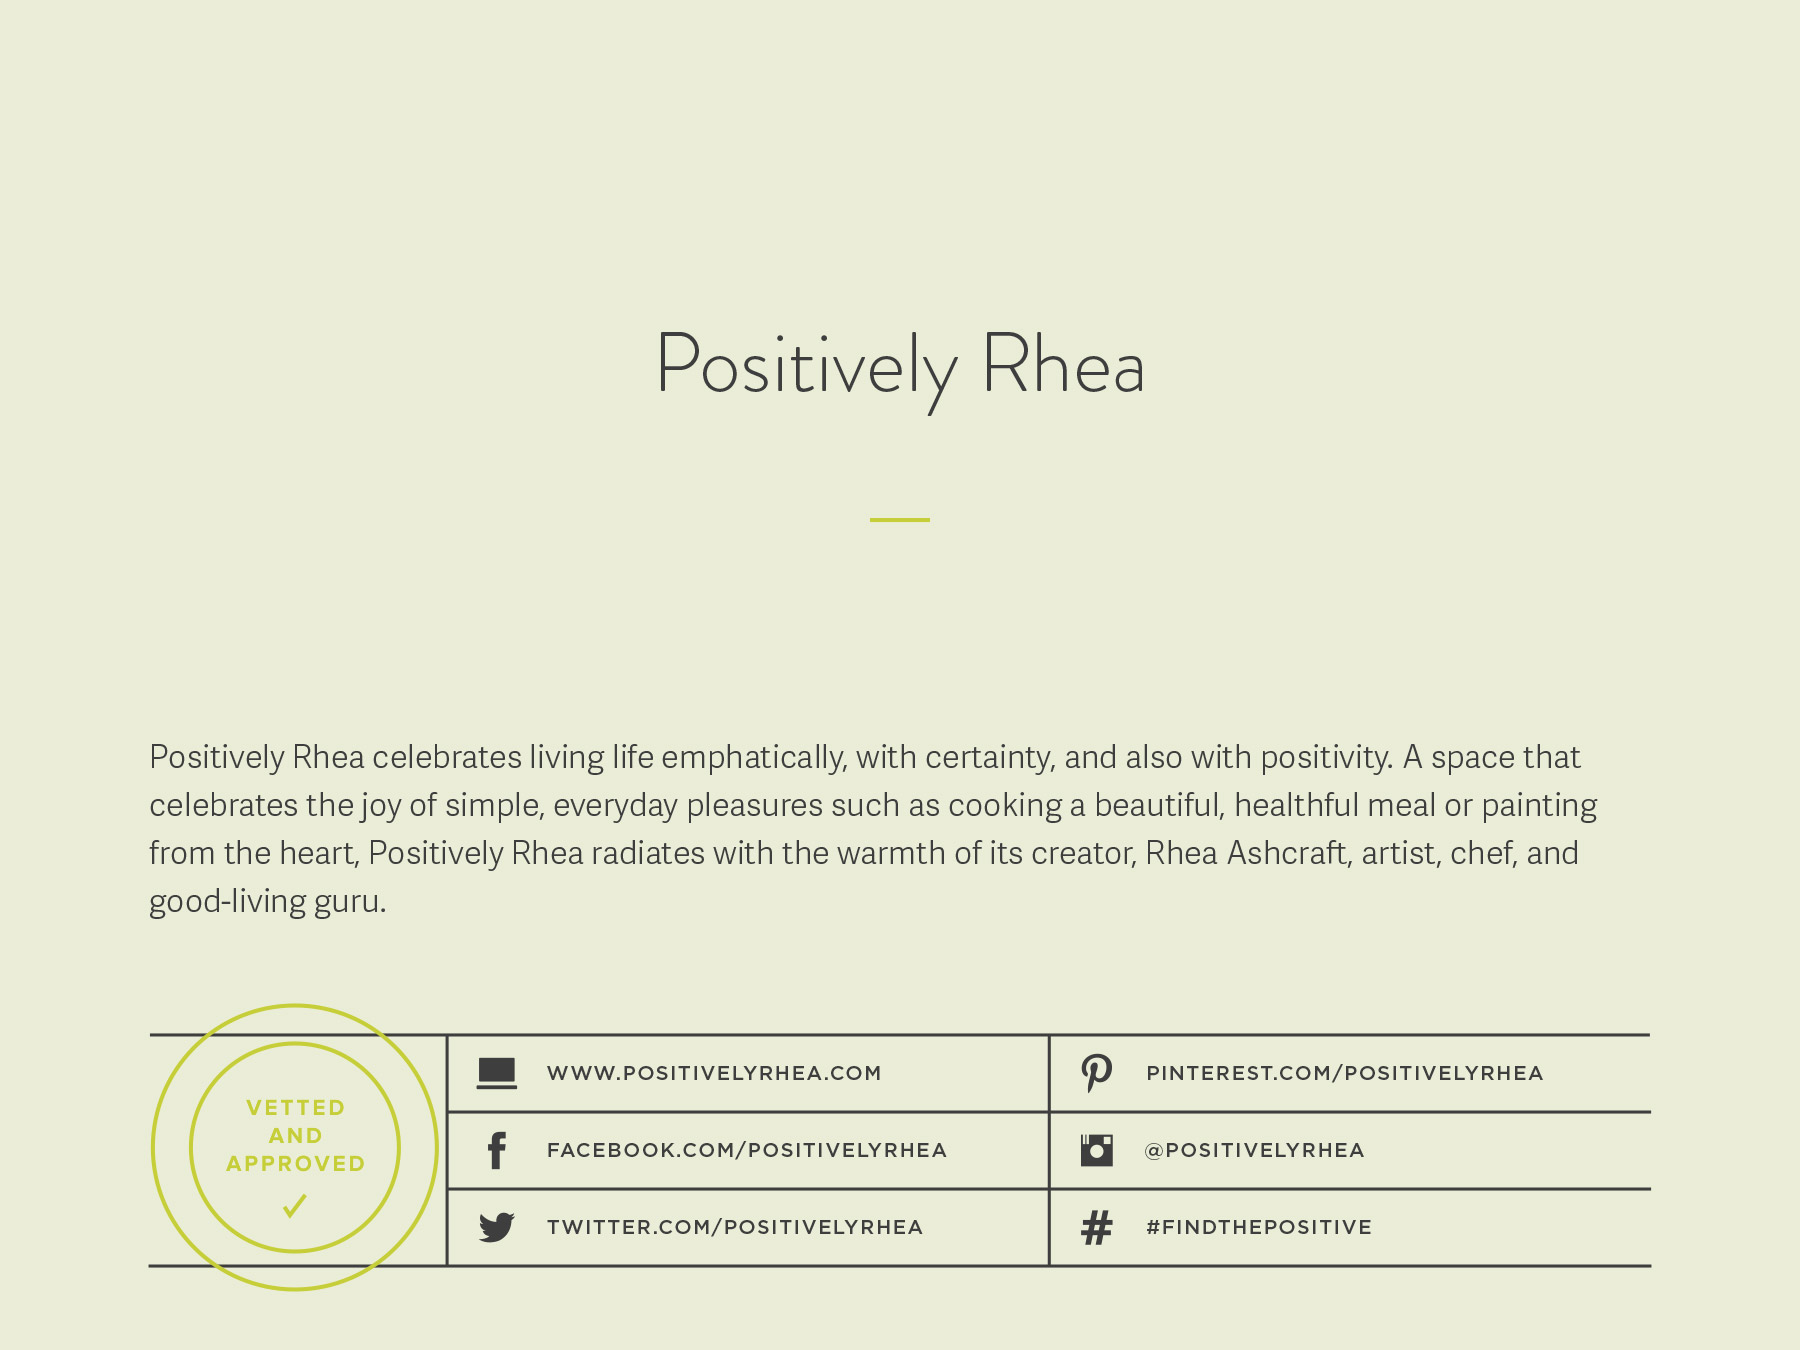 Positively Rhea company naming process